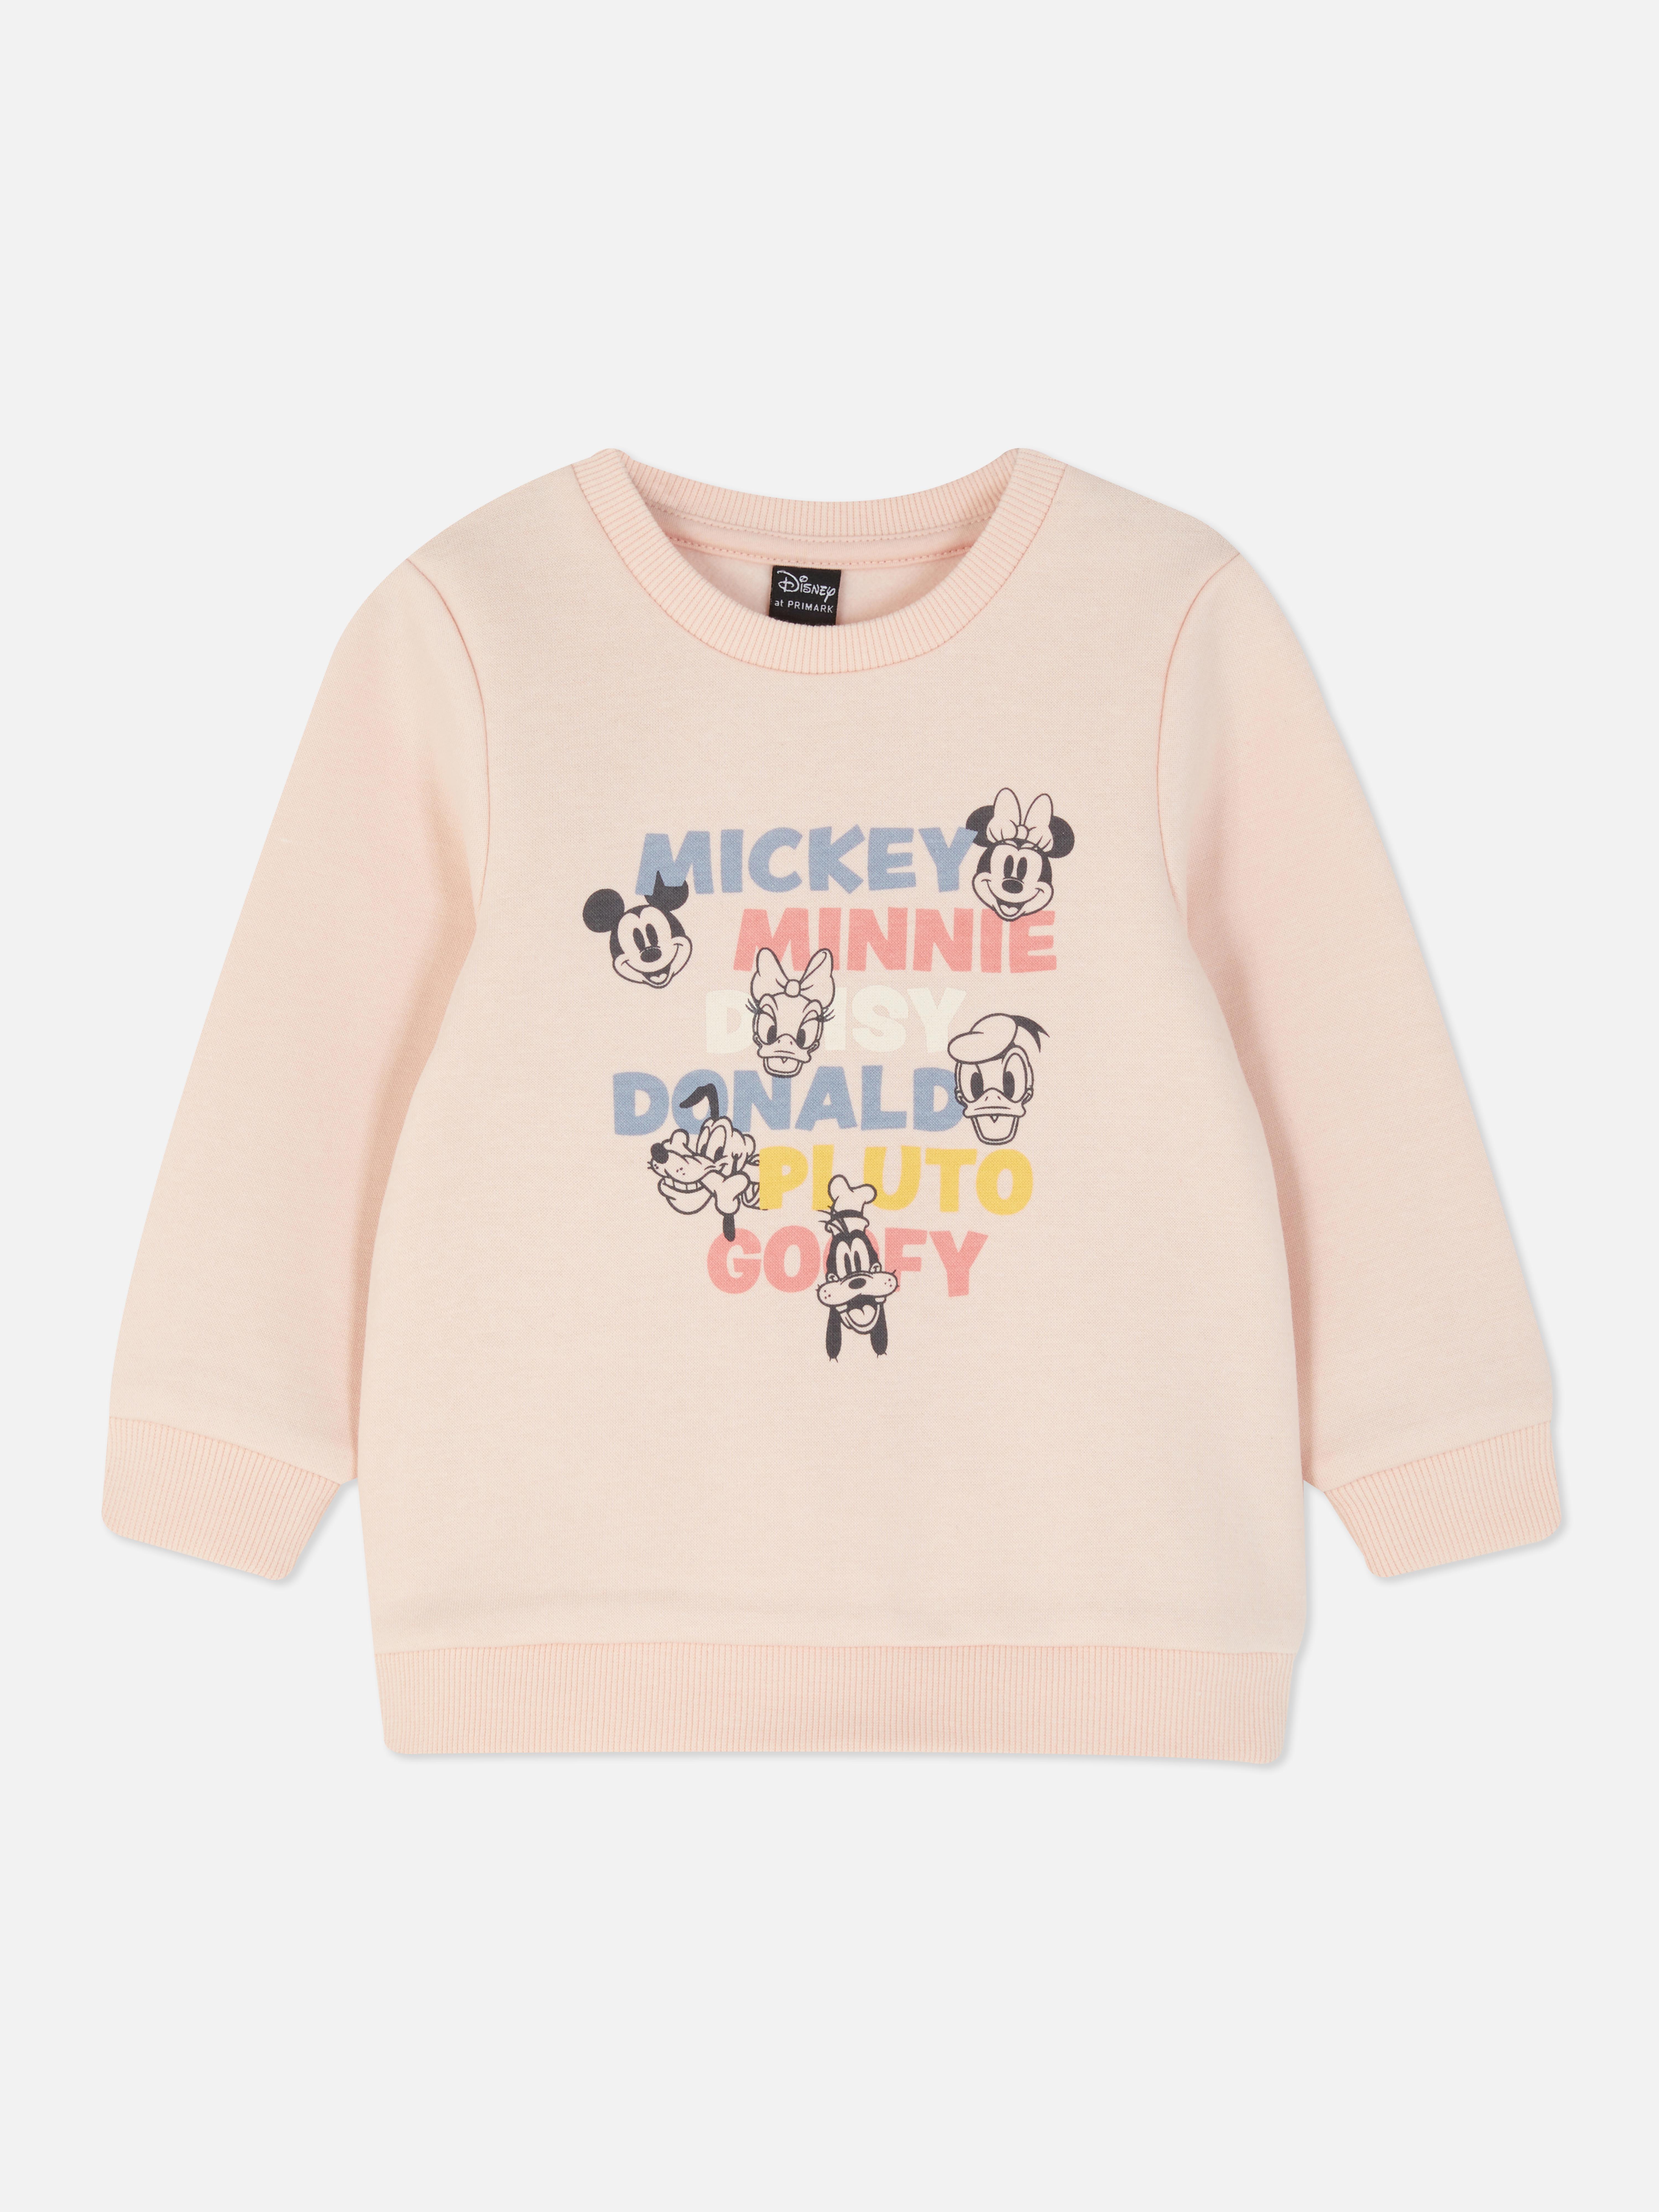 Disney's Mickey Mouse & Friends Crew Neck Sweatshirt